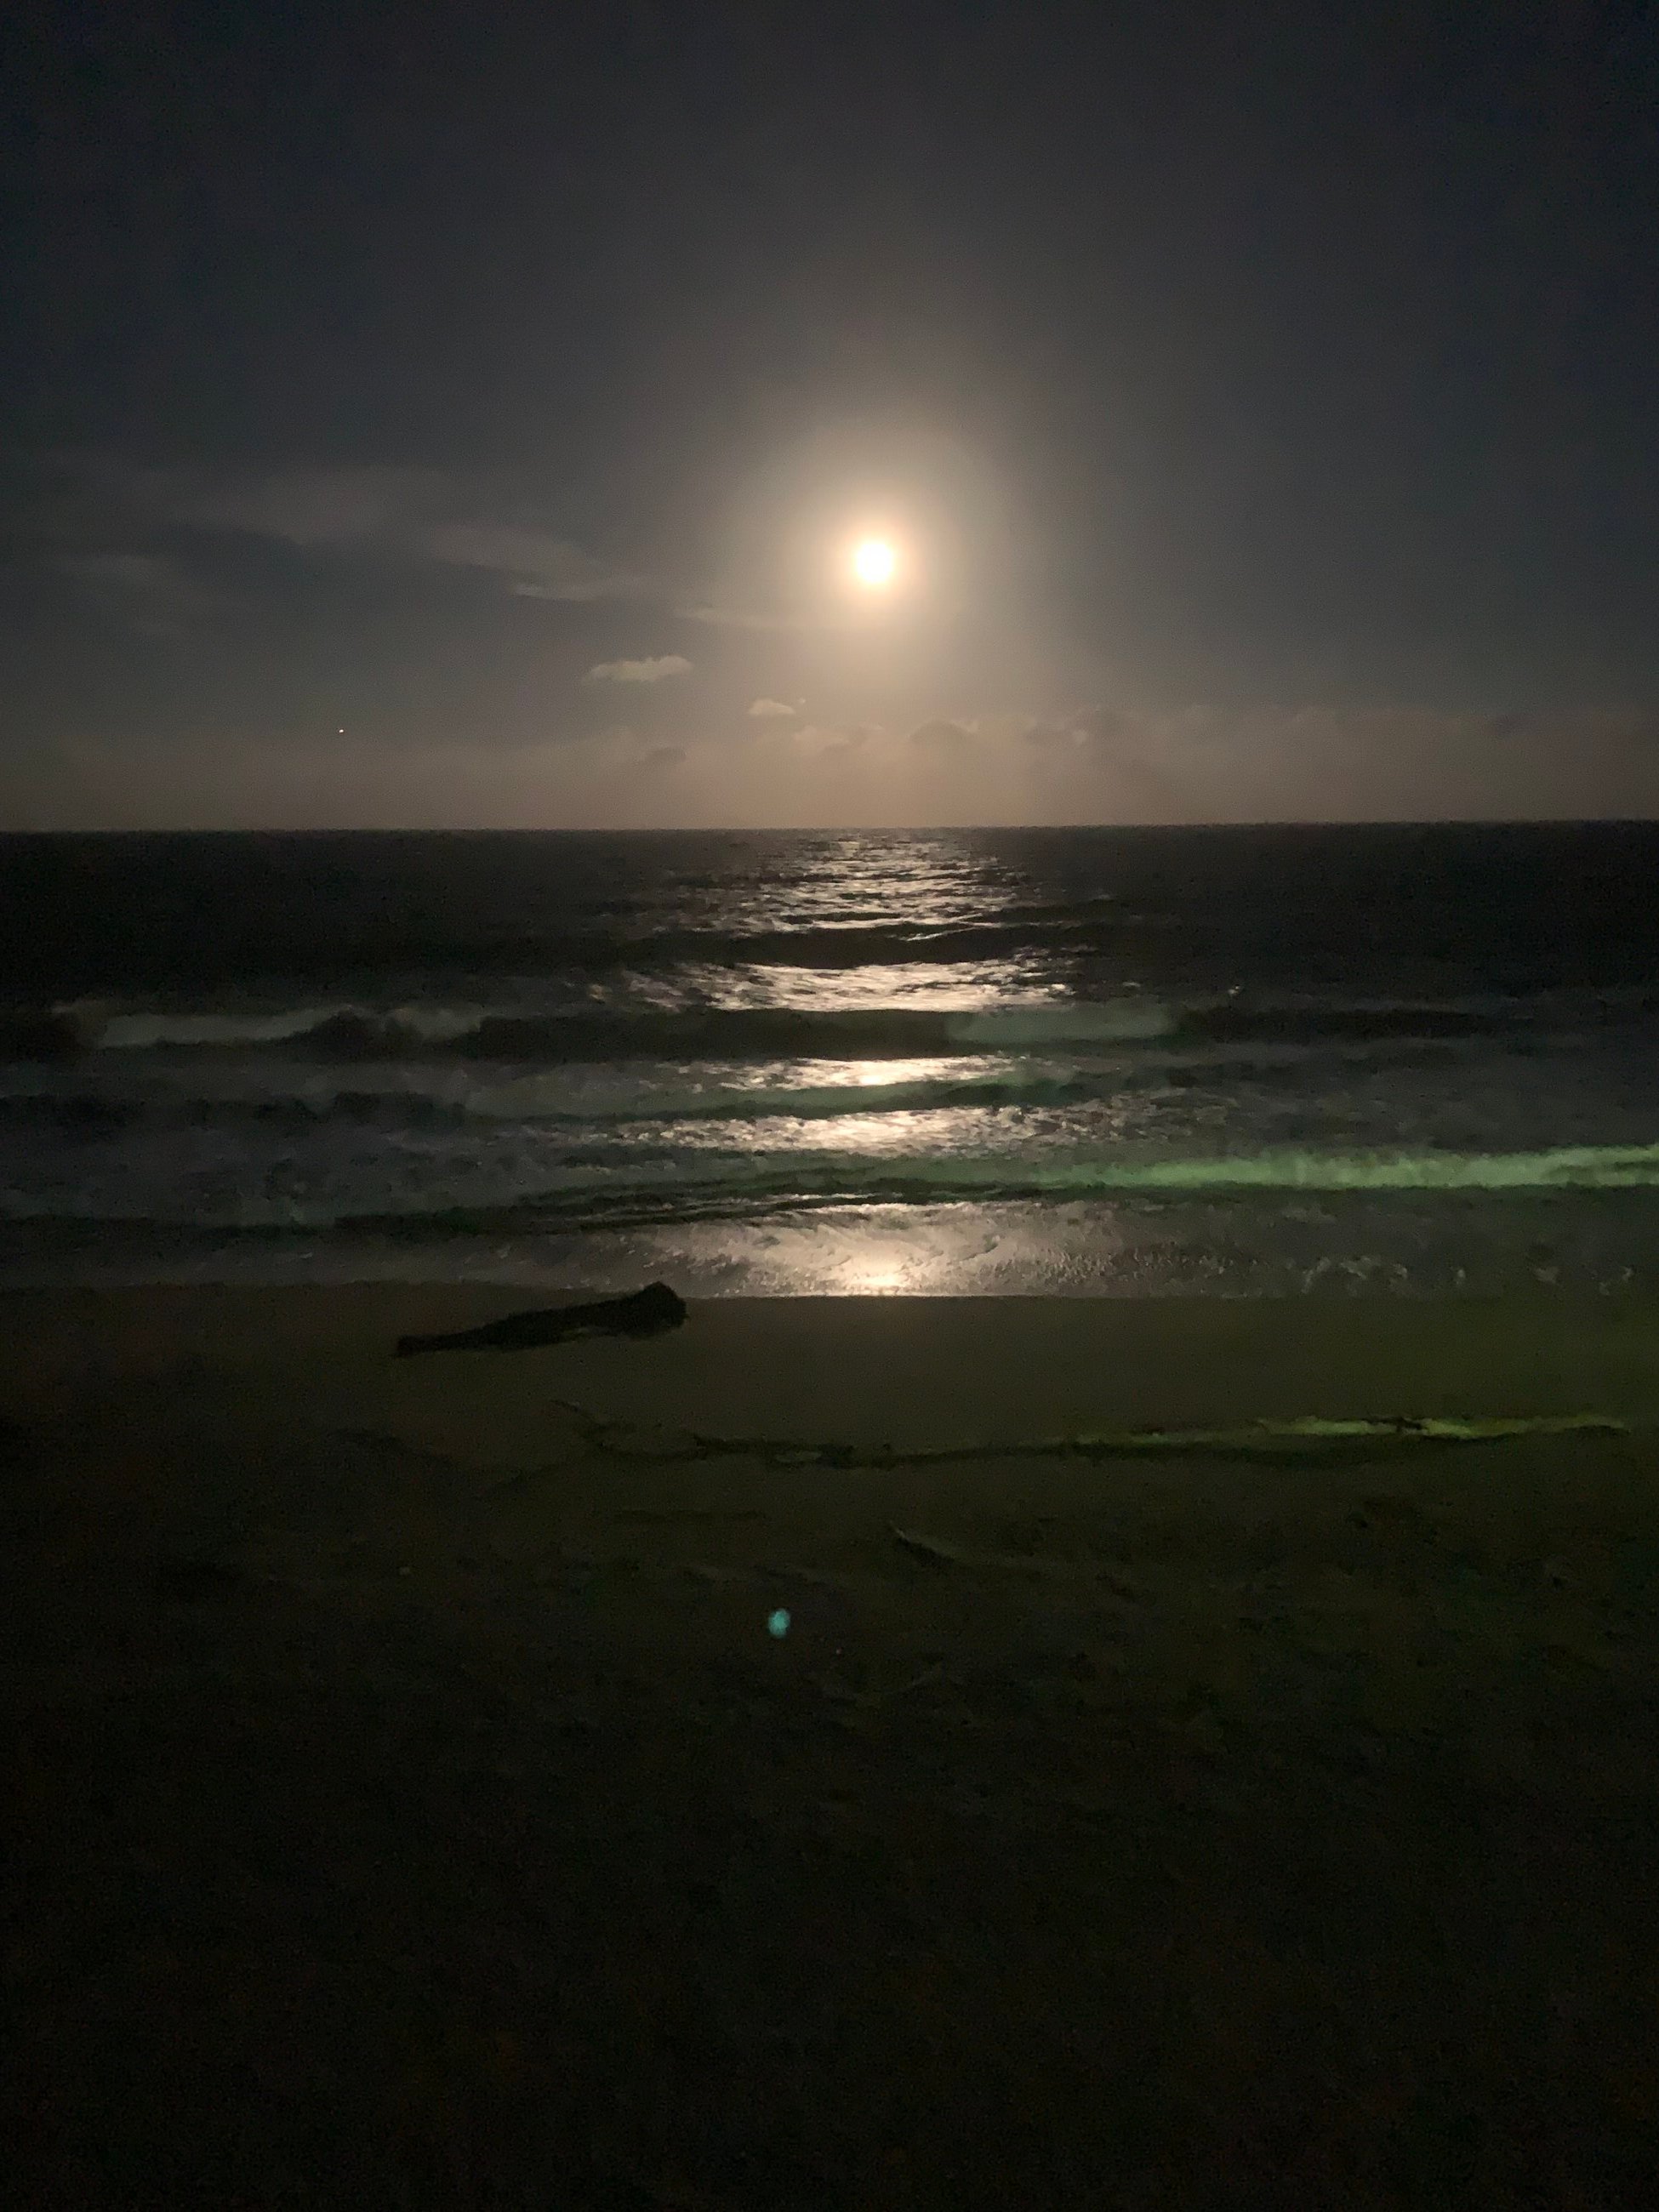 The moon-lit sea